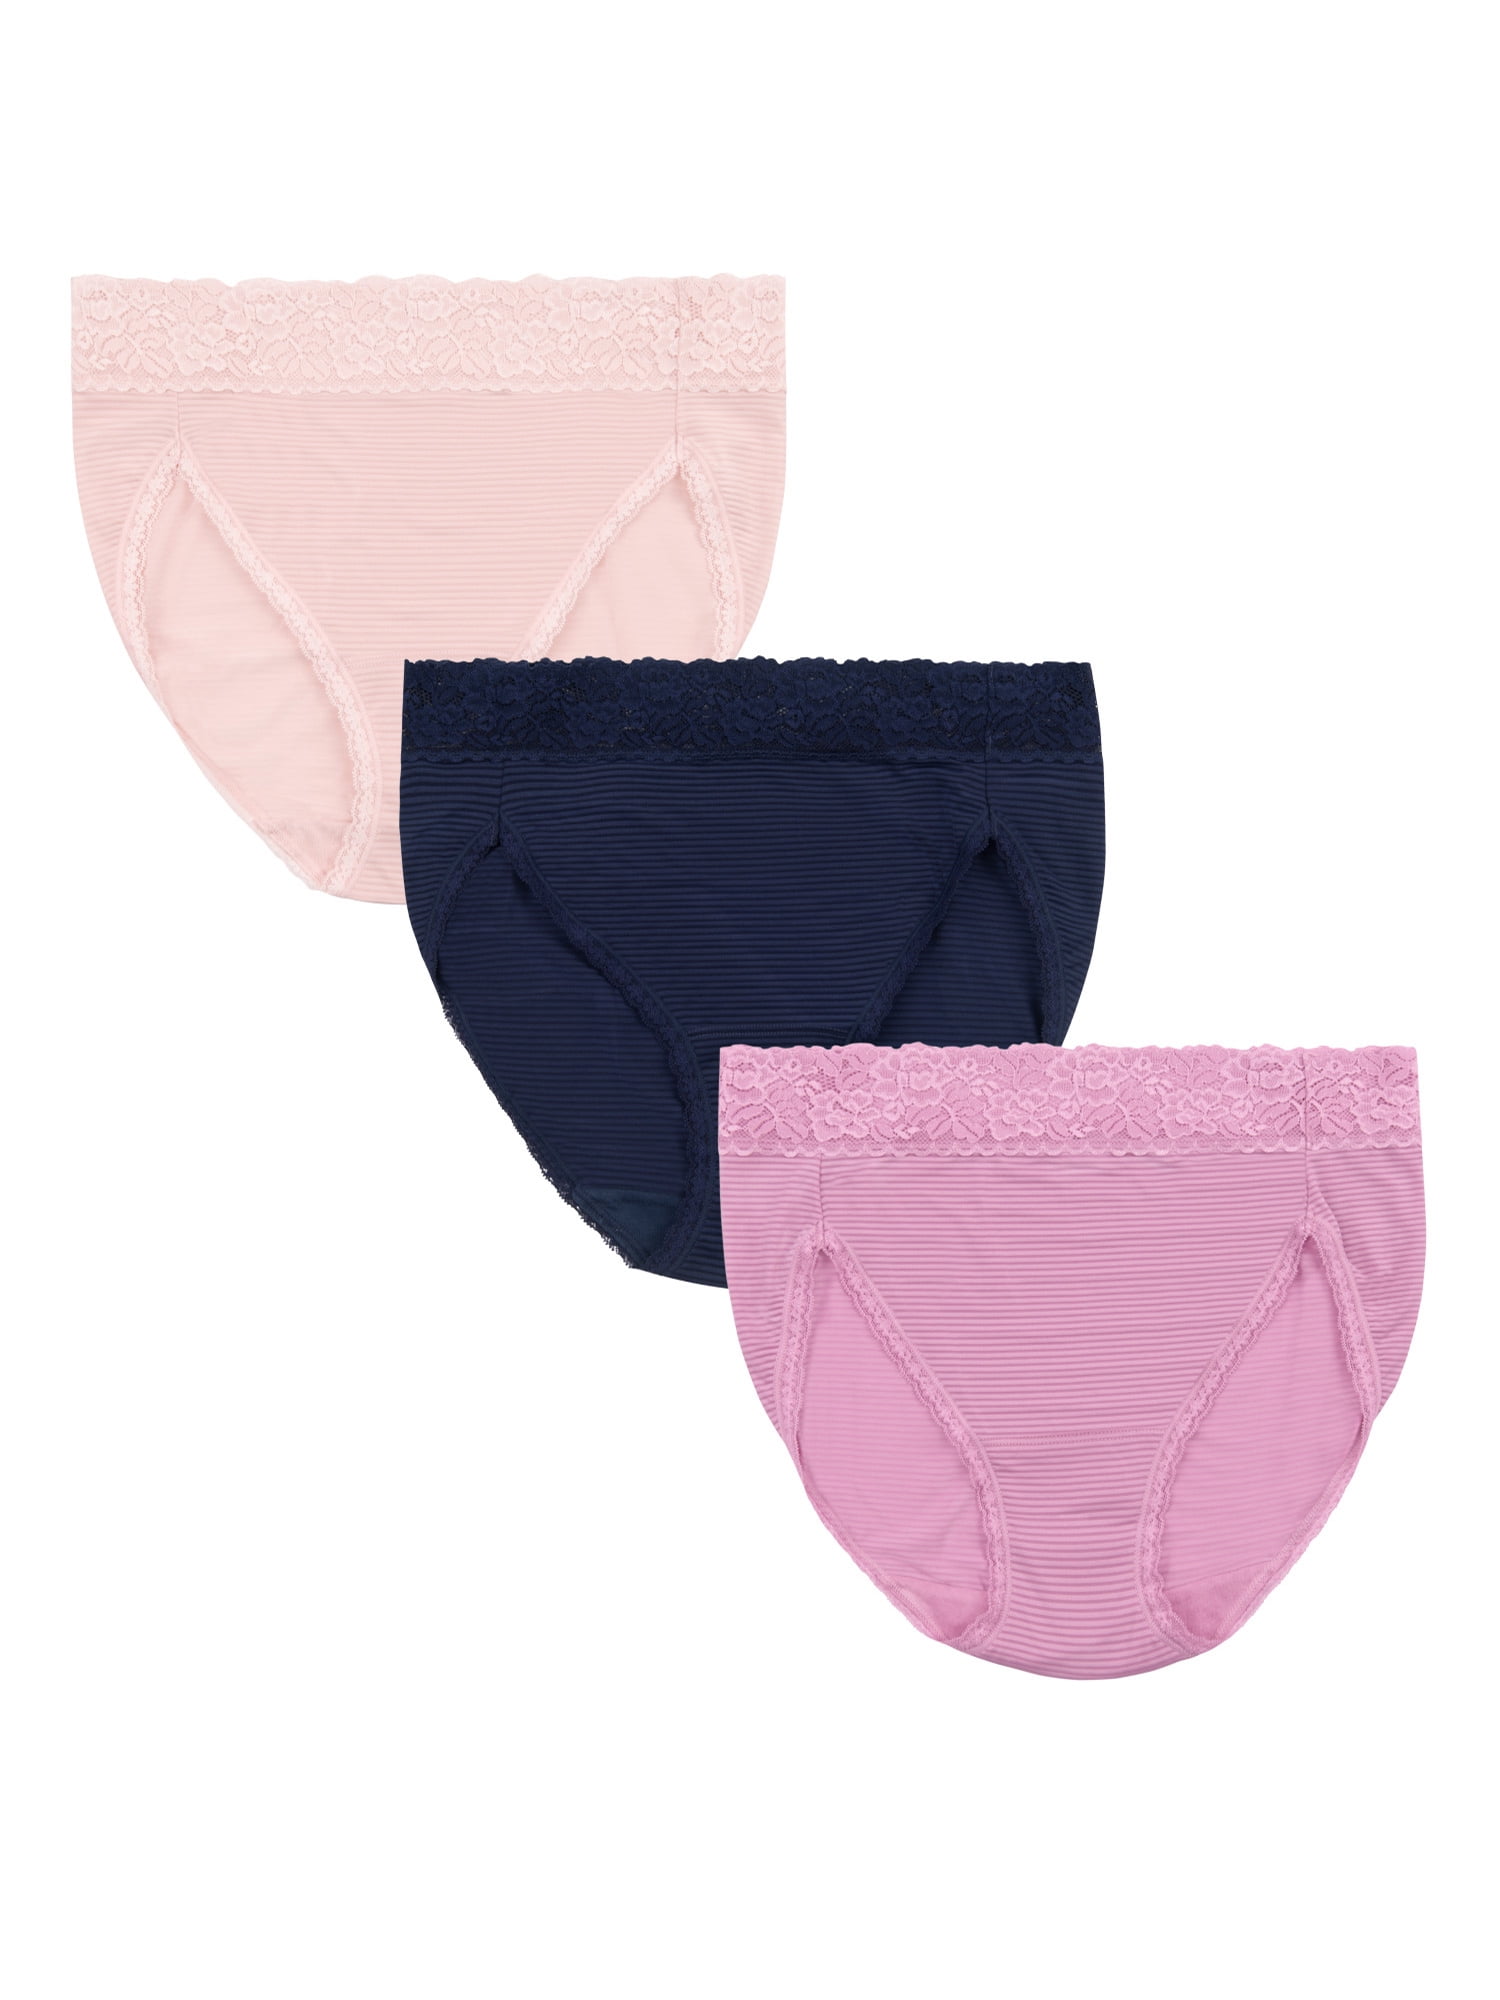 Vanity Fair Radiant Collection Women's Undershapers Hi-Cut Brief Underwear,  3 Pack